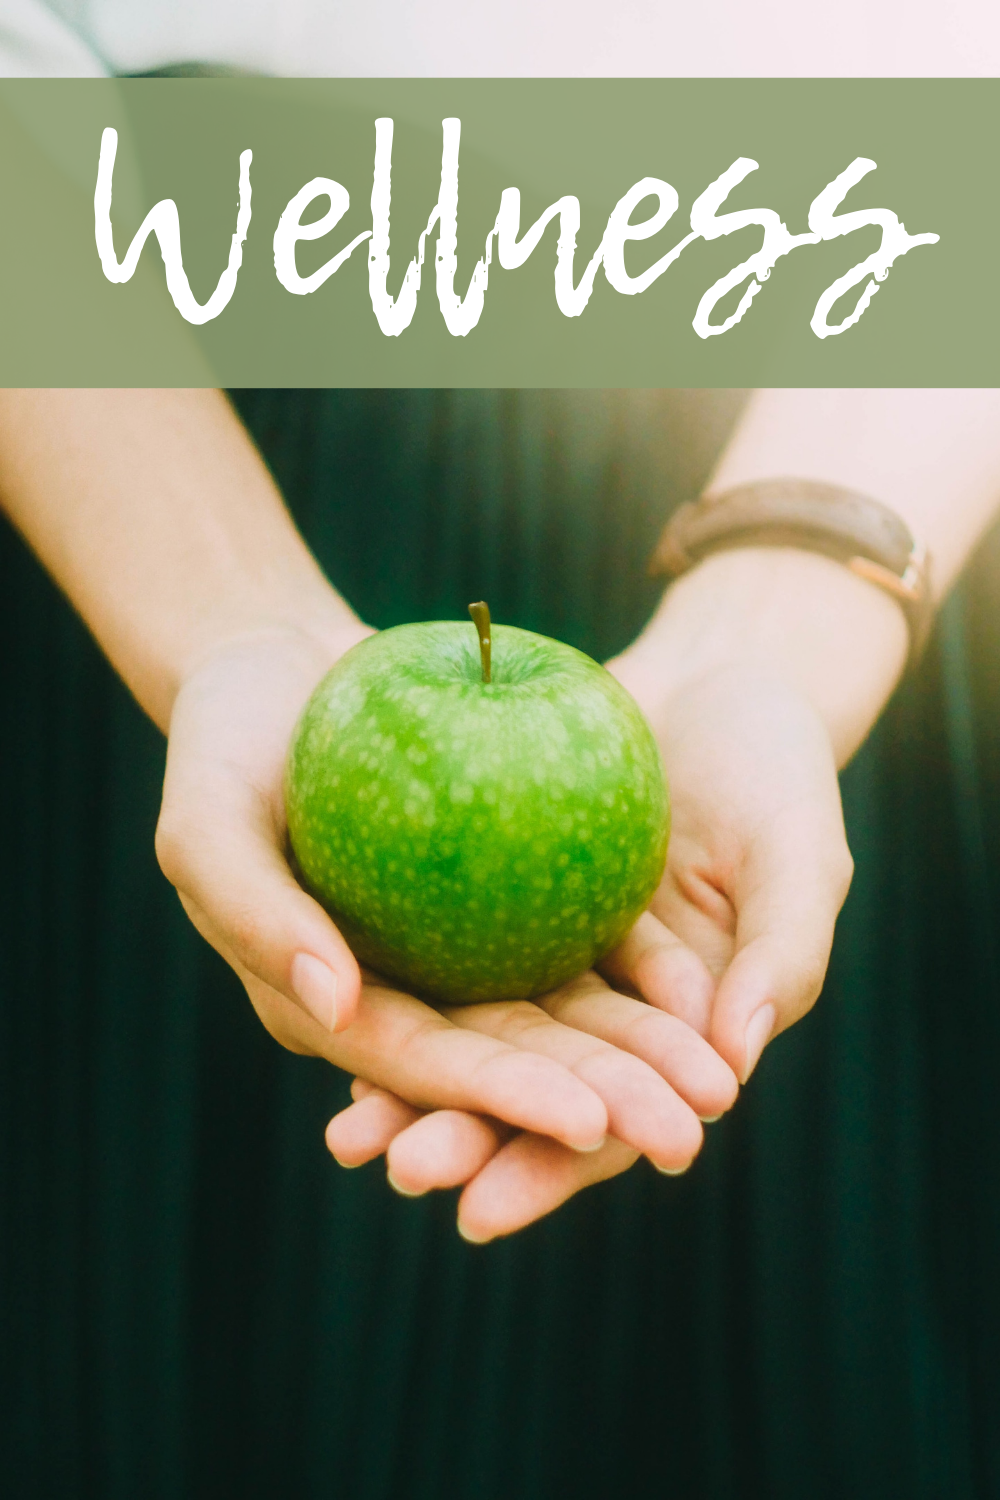 hands holding a green apple